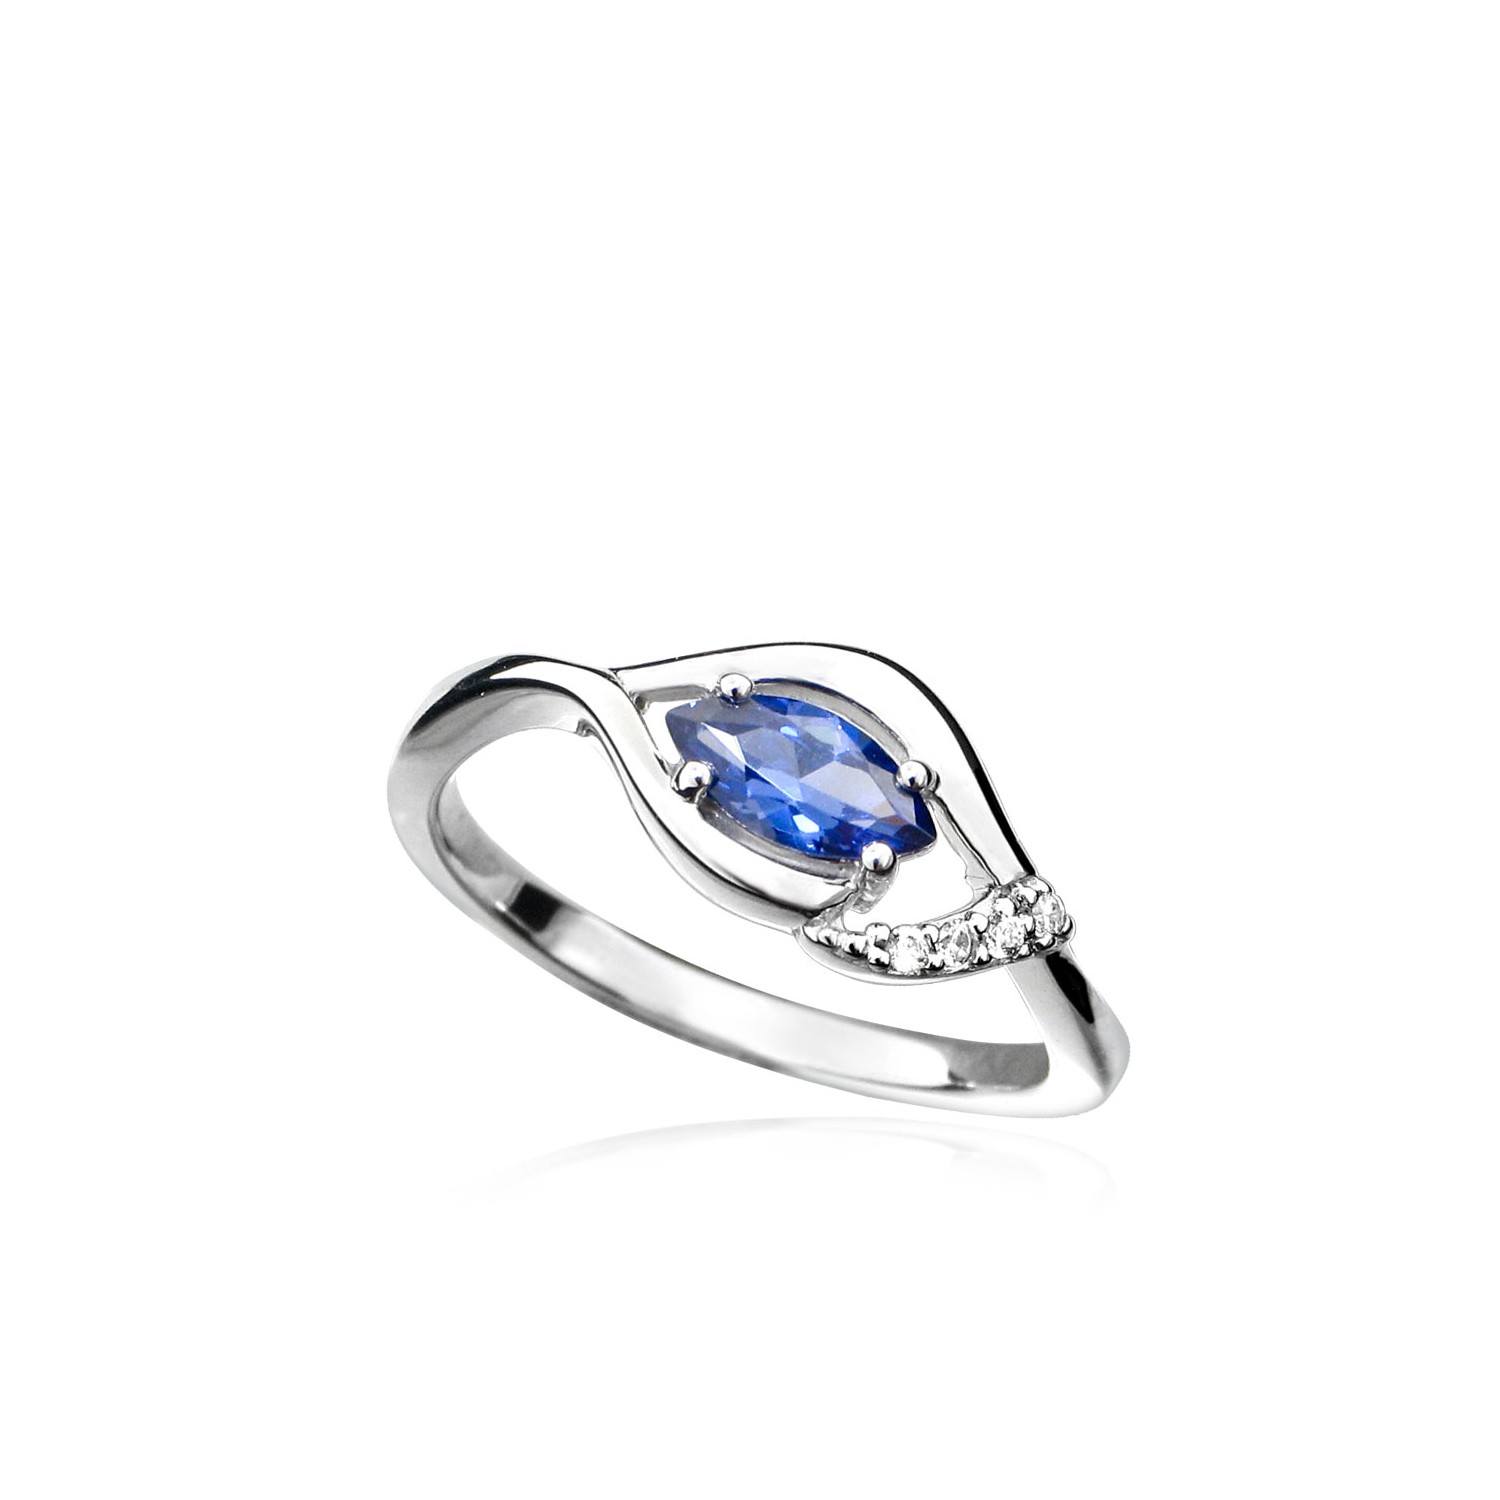 MOISS Moiss stříbrný prsten ADRIANE s TANZANITEM RG000036 Velikost 51 mm RG000036 + doprava ZDARMA